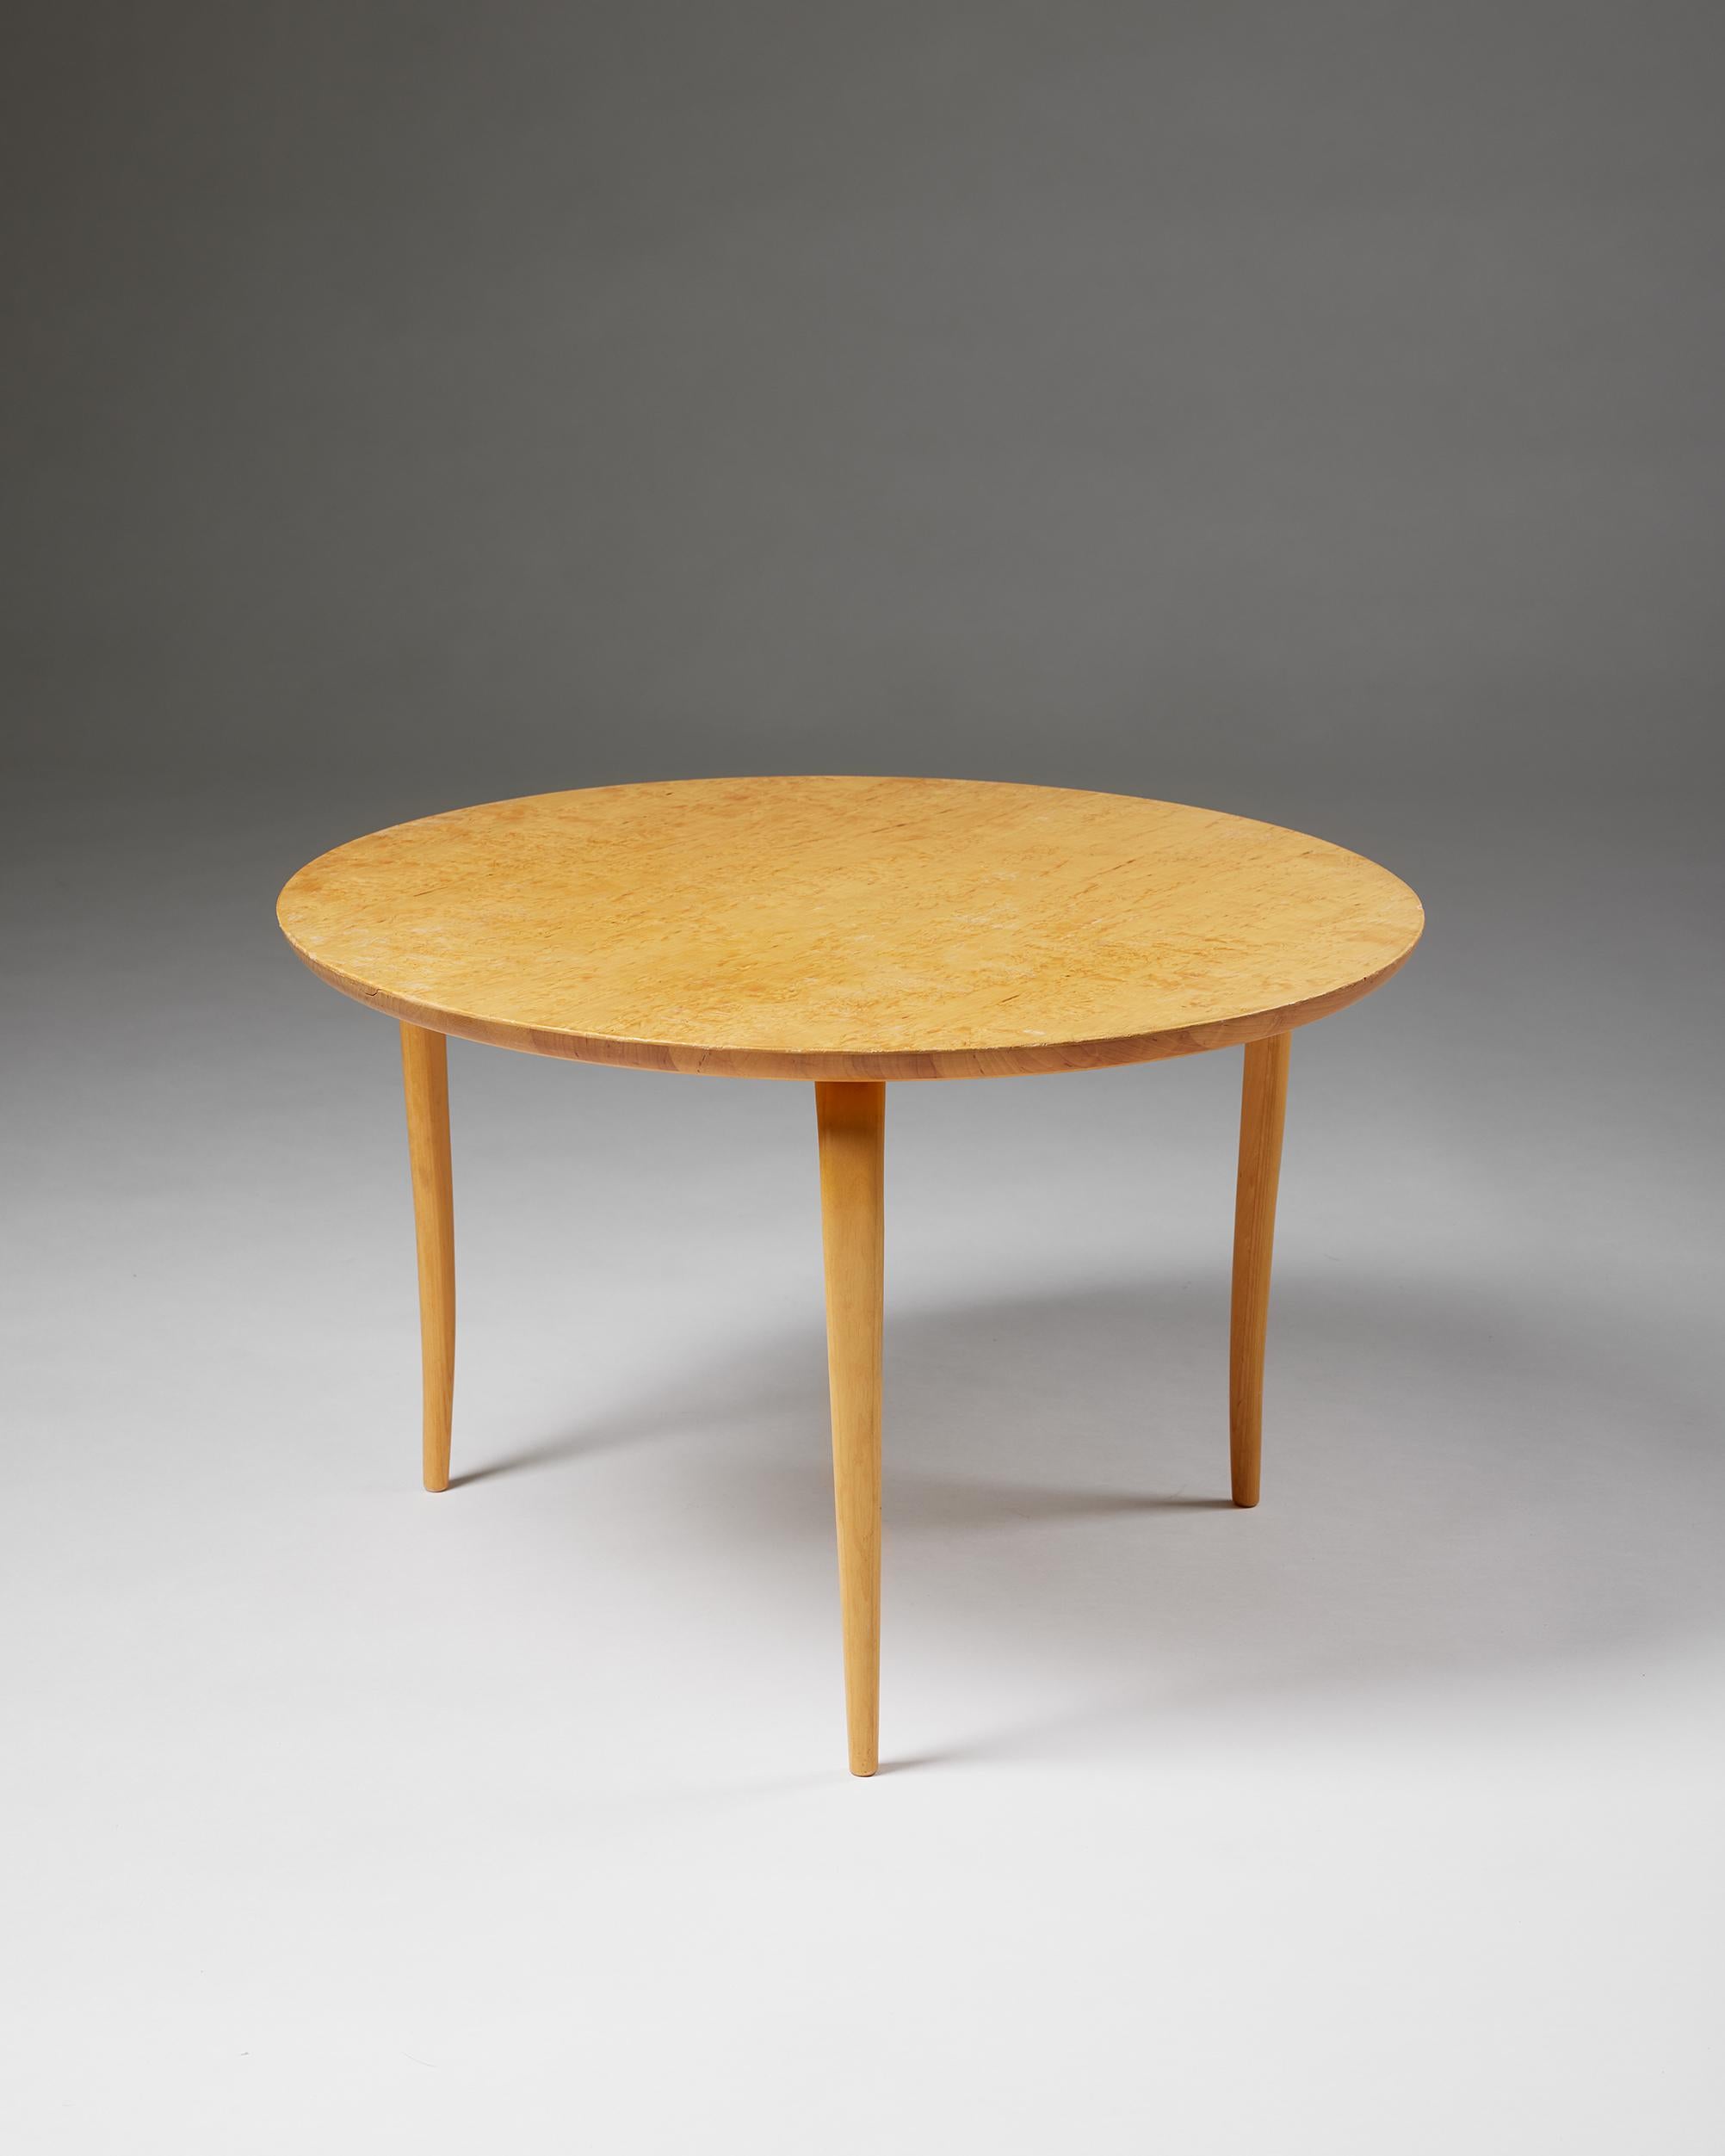 Occasional table ‘Annika’ designed by Bruno Mathsson for Karl Mathsson,
Sweden, 1976.

Birch.

Stamped.

H: 41.5 cm
Diameter: 65 cm